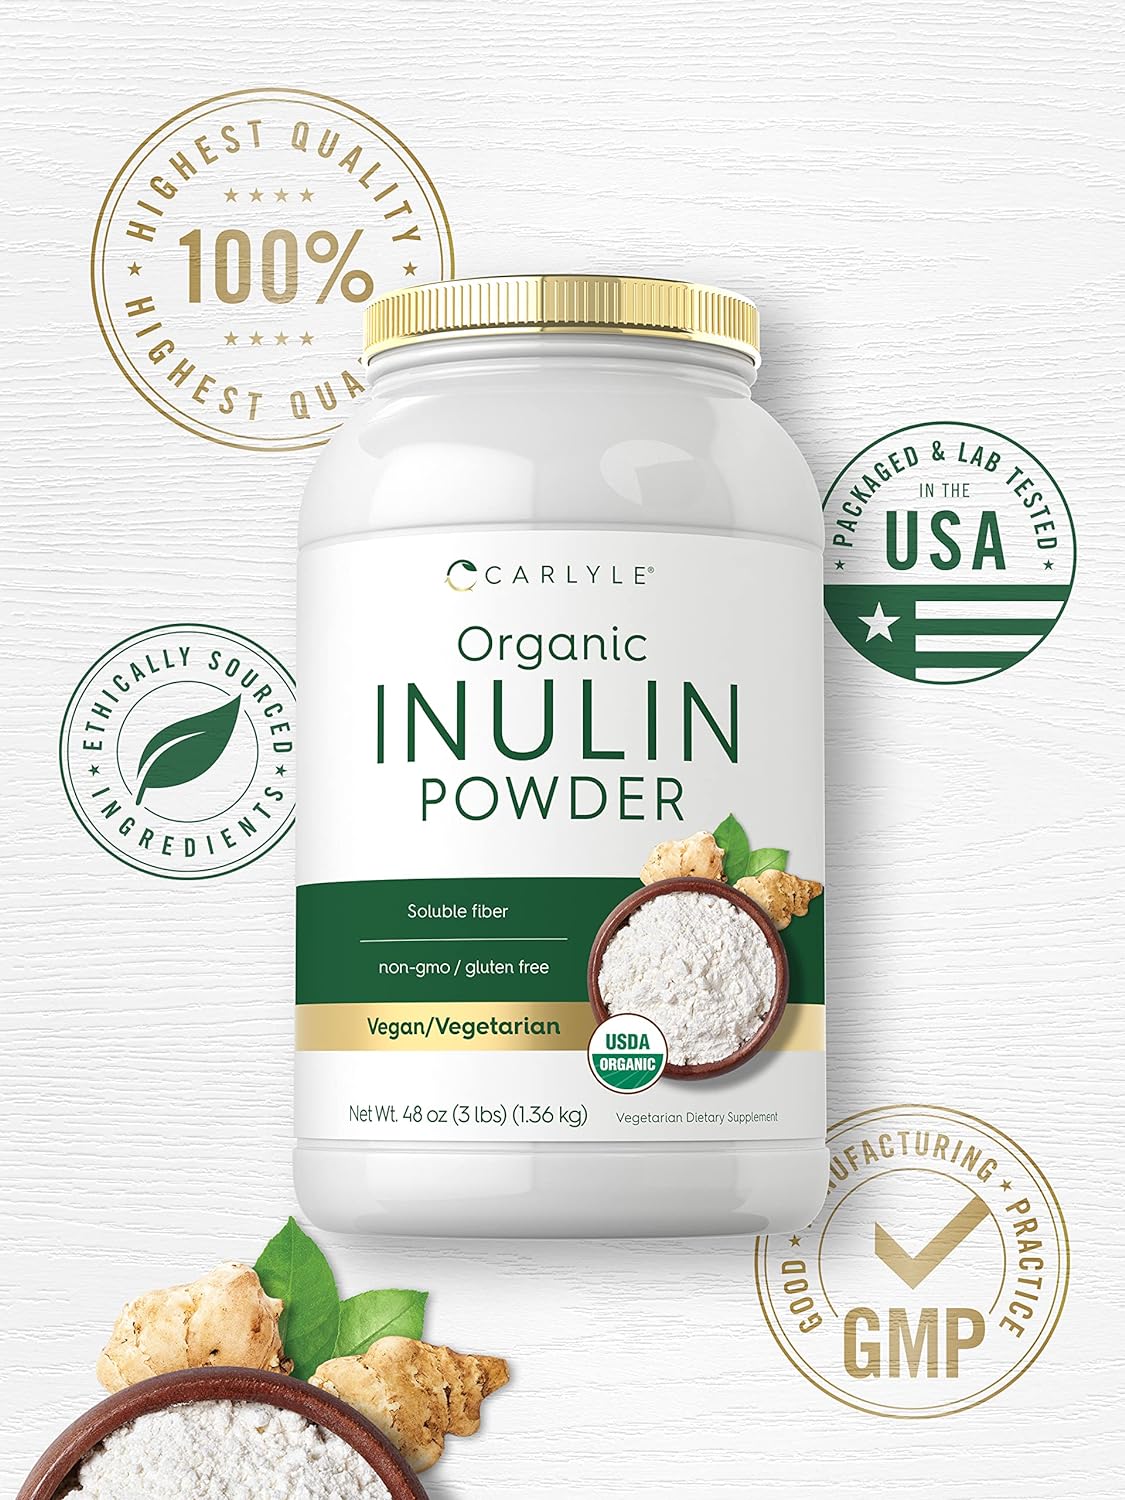 Carlyle Organic Inulin Powder 48oz | Fiber Supplement from Jerusalem Artichoke | for Probiotic Health | Vegan, Vegetarian, Non-GMO, Gluten Free : Health & Household